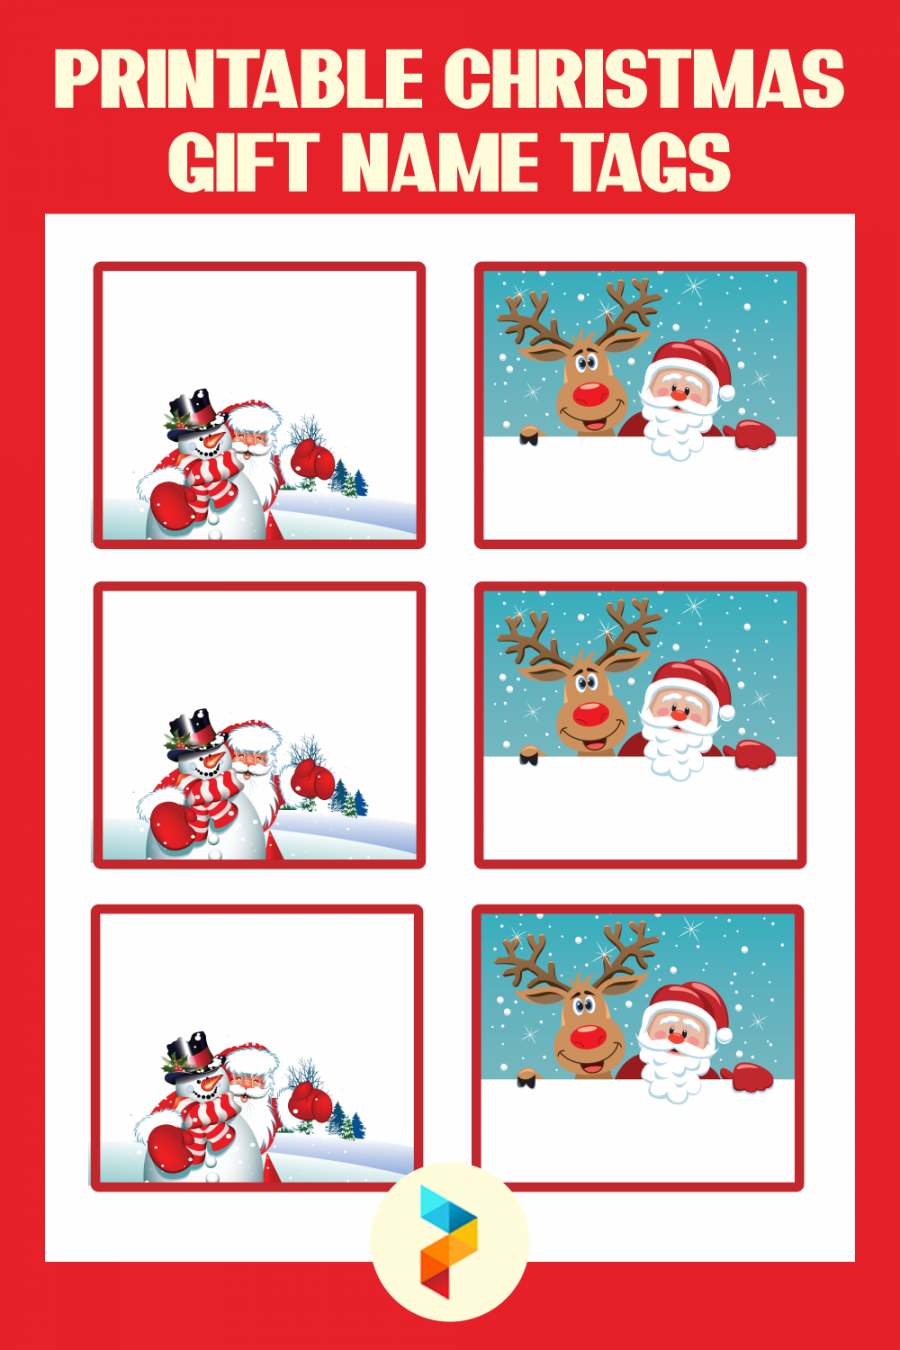 Best Free Printable Christmas Gift Name Tags - printablee - Free Printable Christmas Name Tags